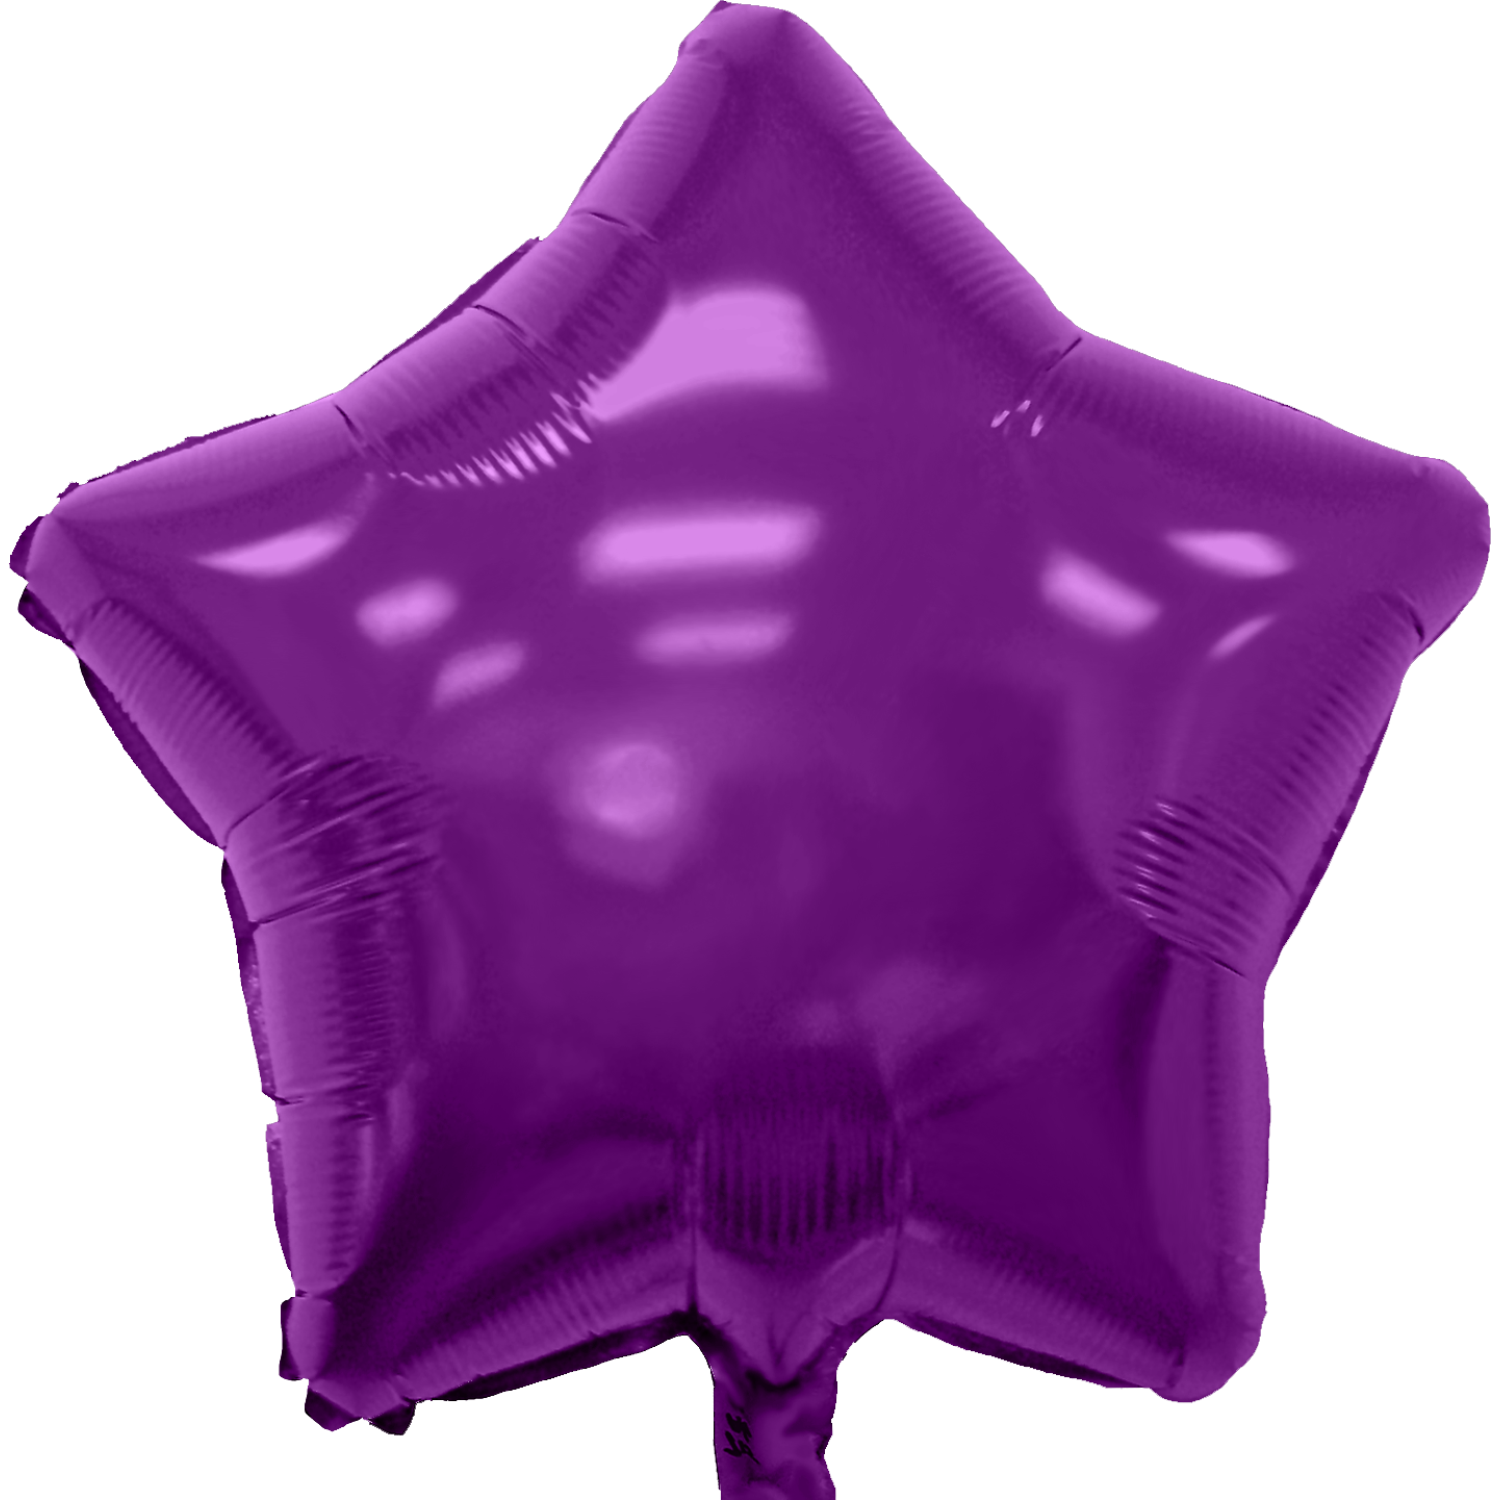 http://images.officebrain.com/migration-api-hidden-new/web/images/626/myrn-star-purple.png